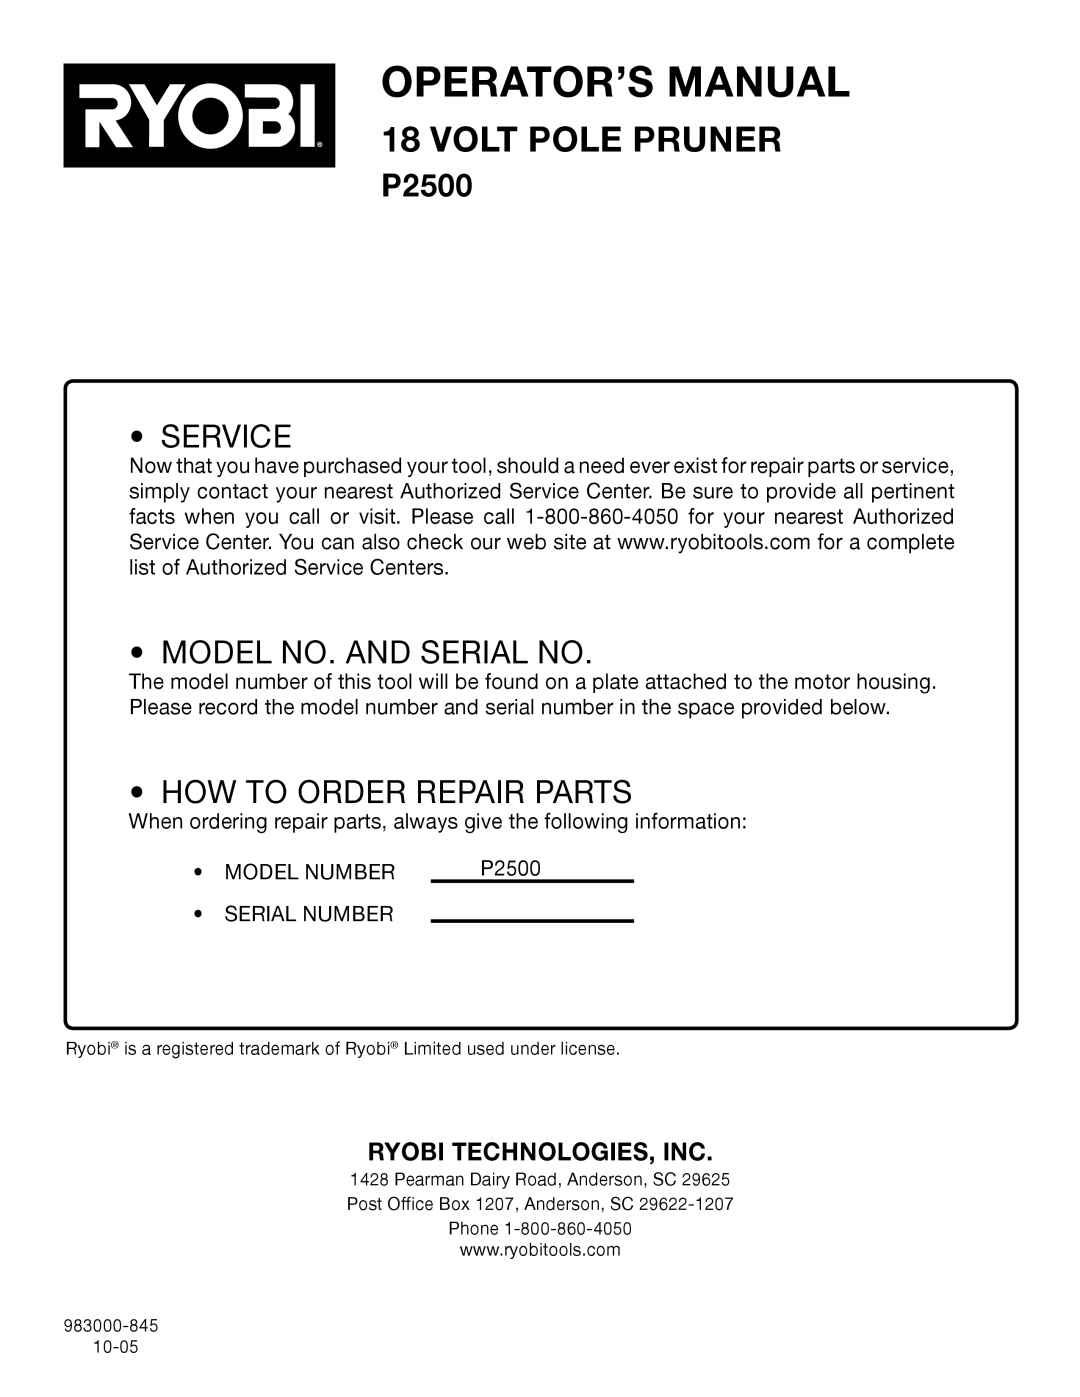 Ryobi Outdoor P2500 manual Ryobi Technologies, Inc, Operator’S Manual, Volt Pole Pruner, Service, Model No. And Serial No 